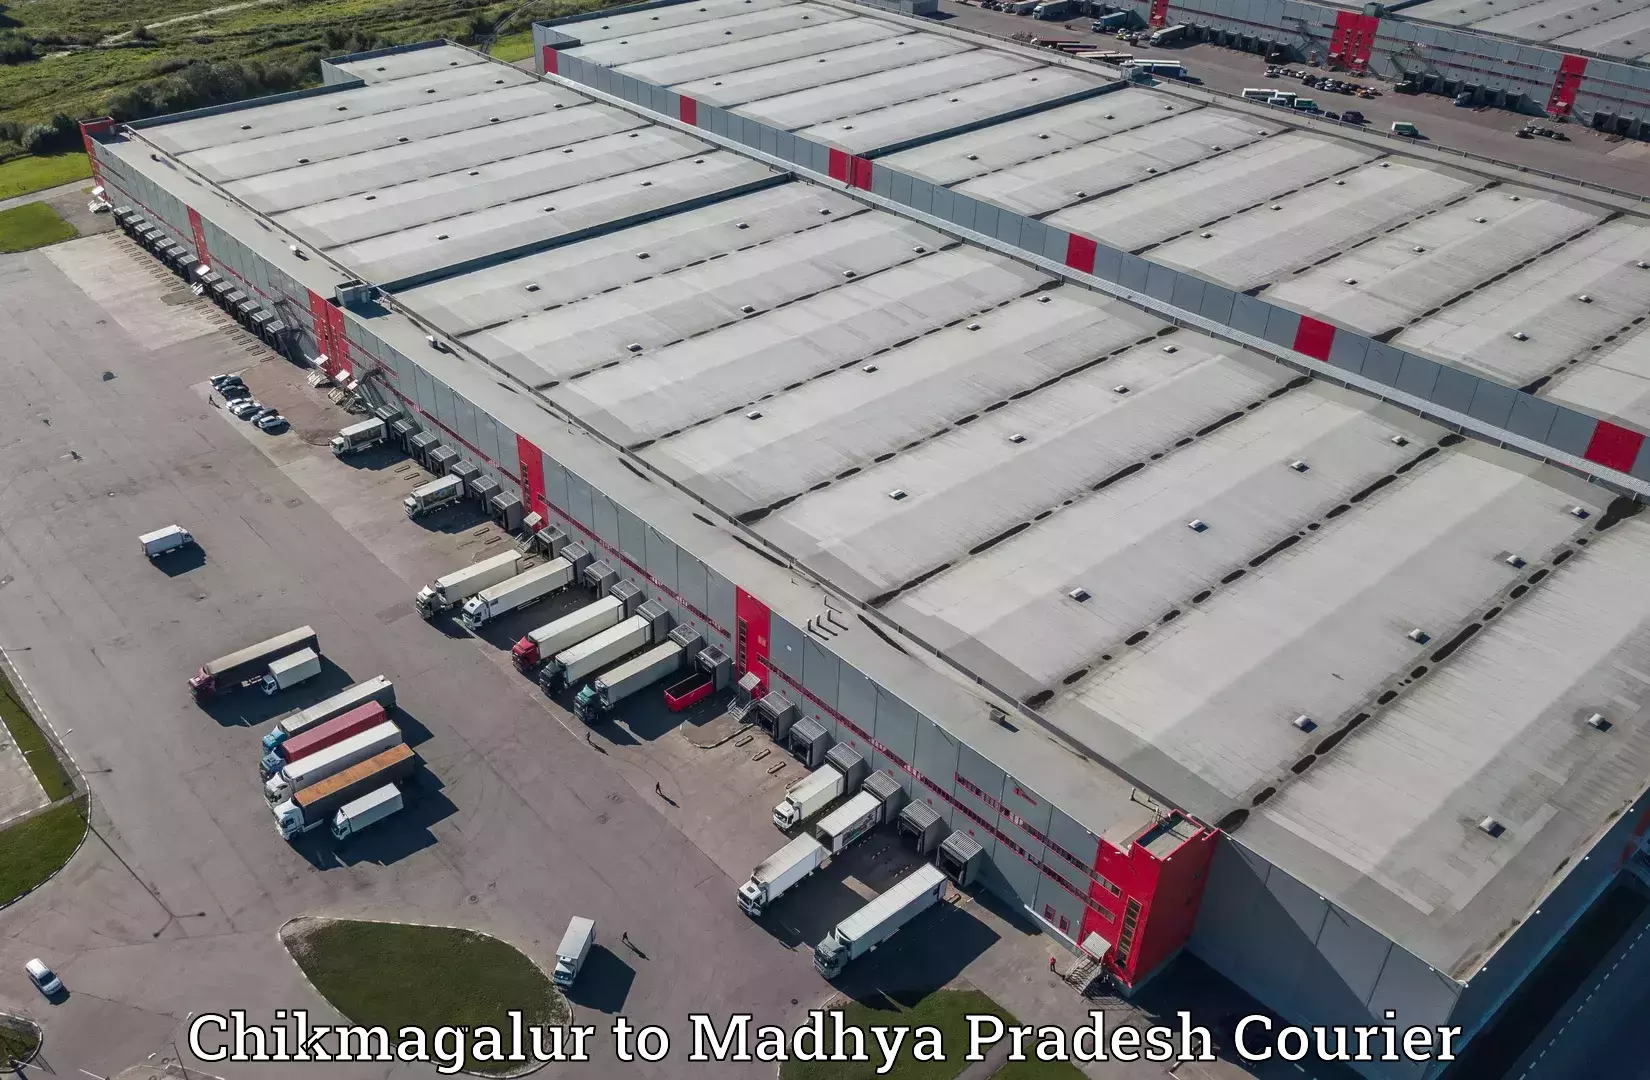 Global logistics network Chikmagalur to Madhya Pradesh